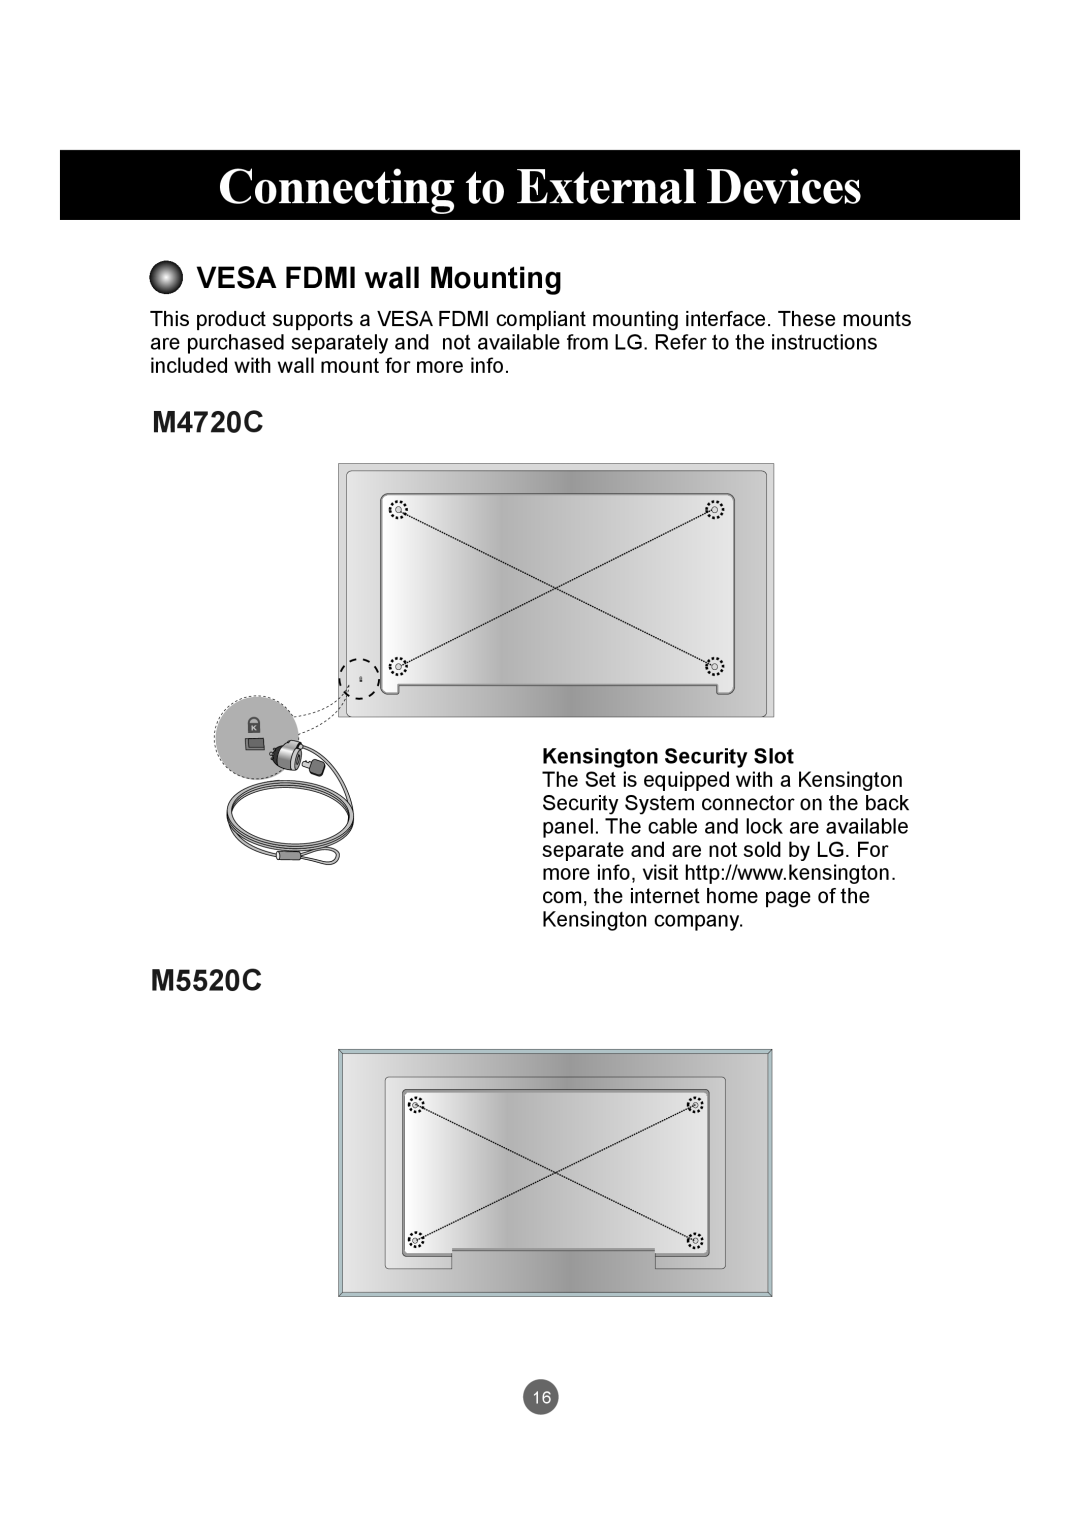 LG Electronics M4720C VESA FDMI wall Mounting, Connecting to External Devices, M5520C, Kensington Security Slot 